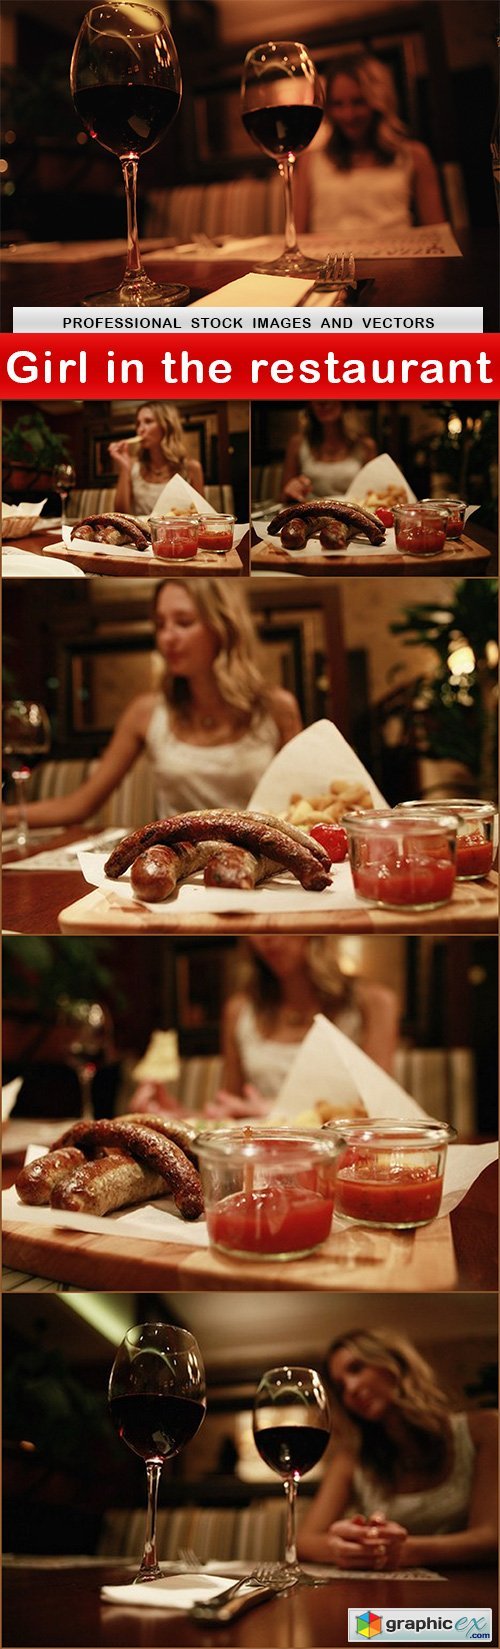 Girl in the restaurant - 6 UHQ JPEG